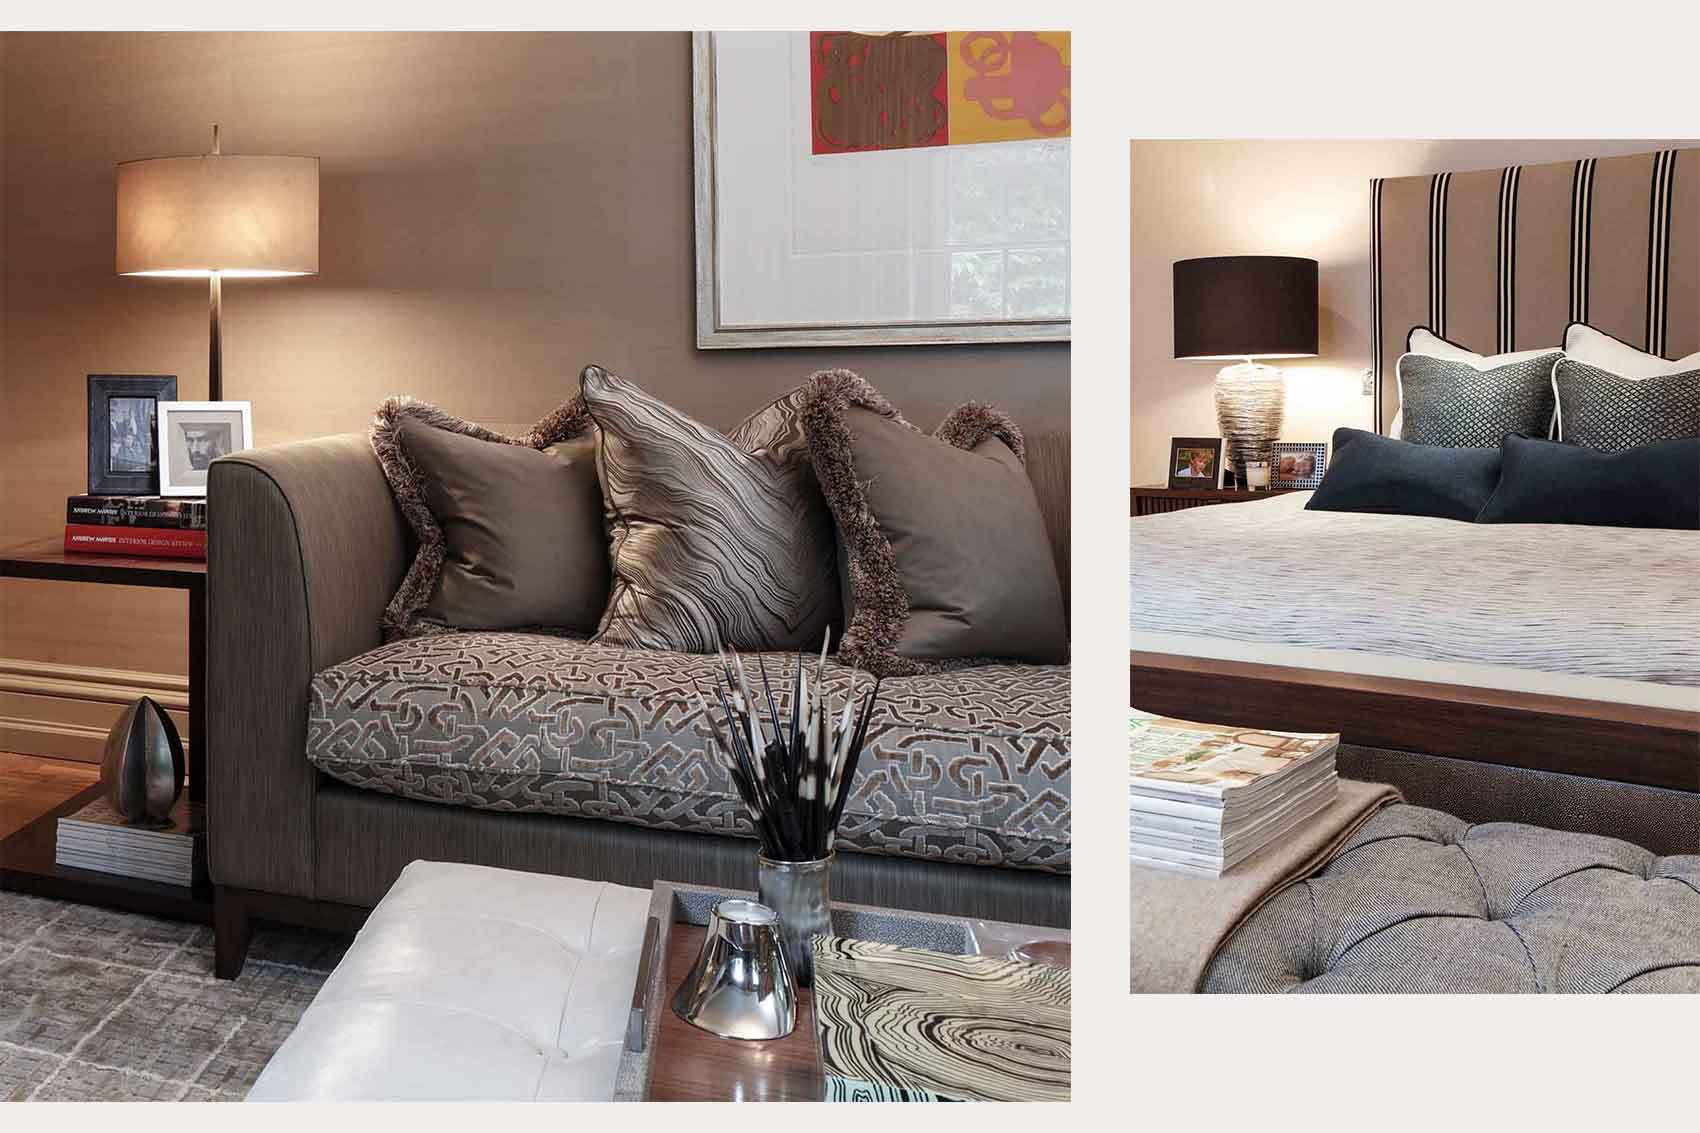 Reception room vignette, comfortable sofa, linen upholstery, silk wall paper. Master bedroom bespoke bed